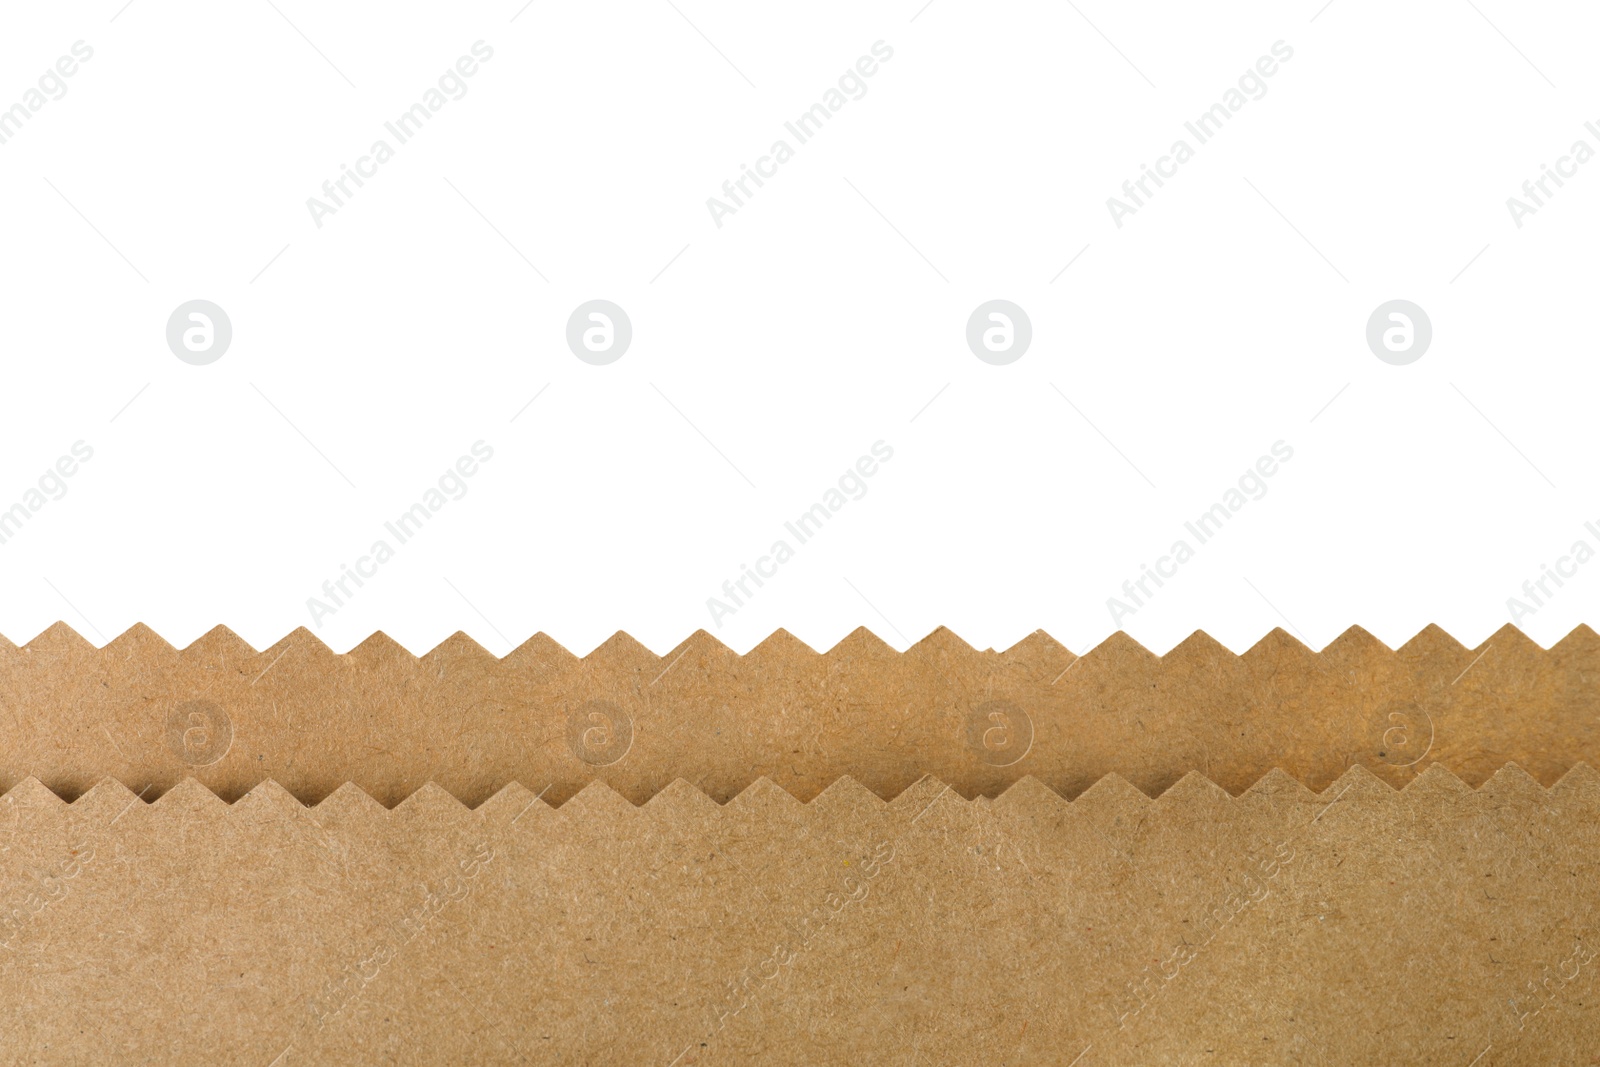 Photo of Kraft paper bag on white background, closeup